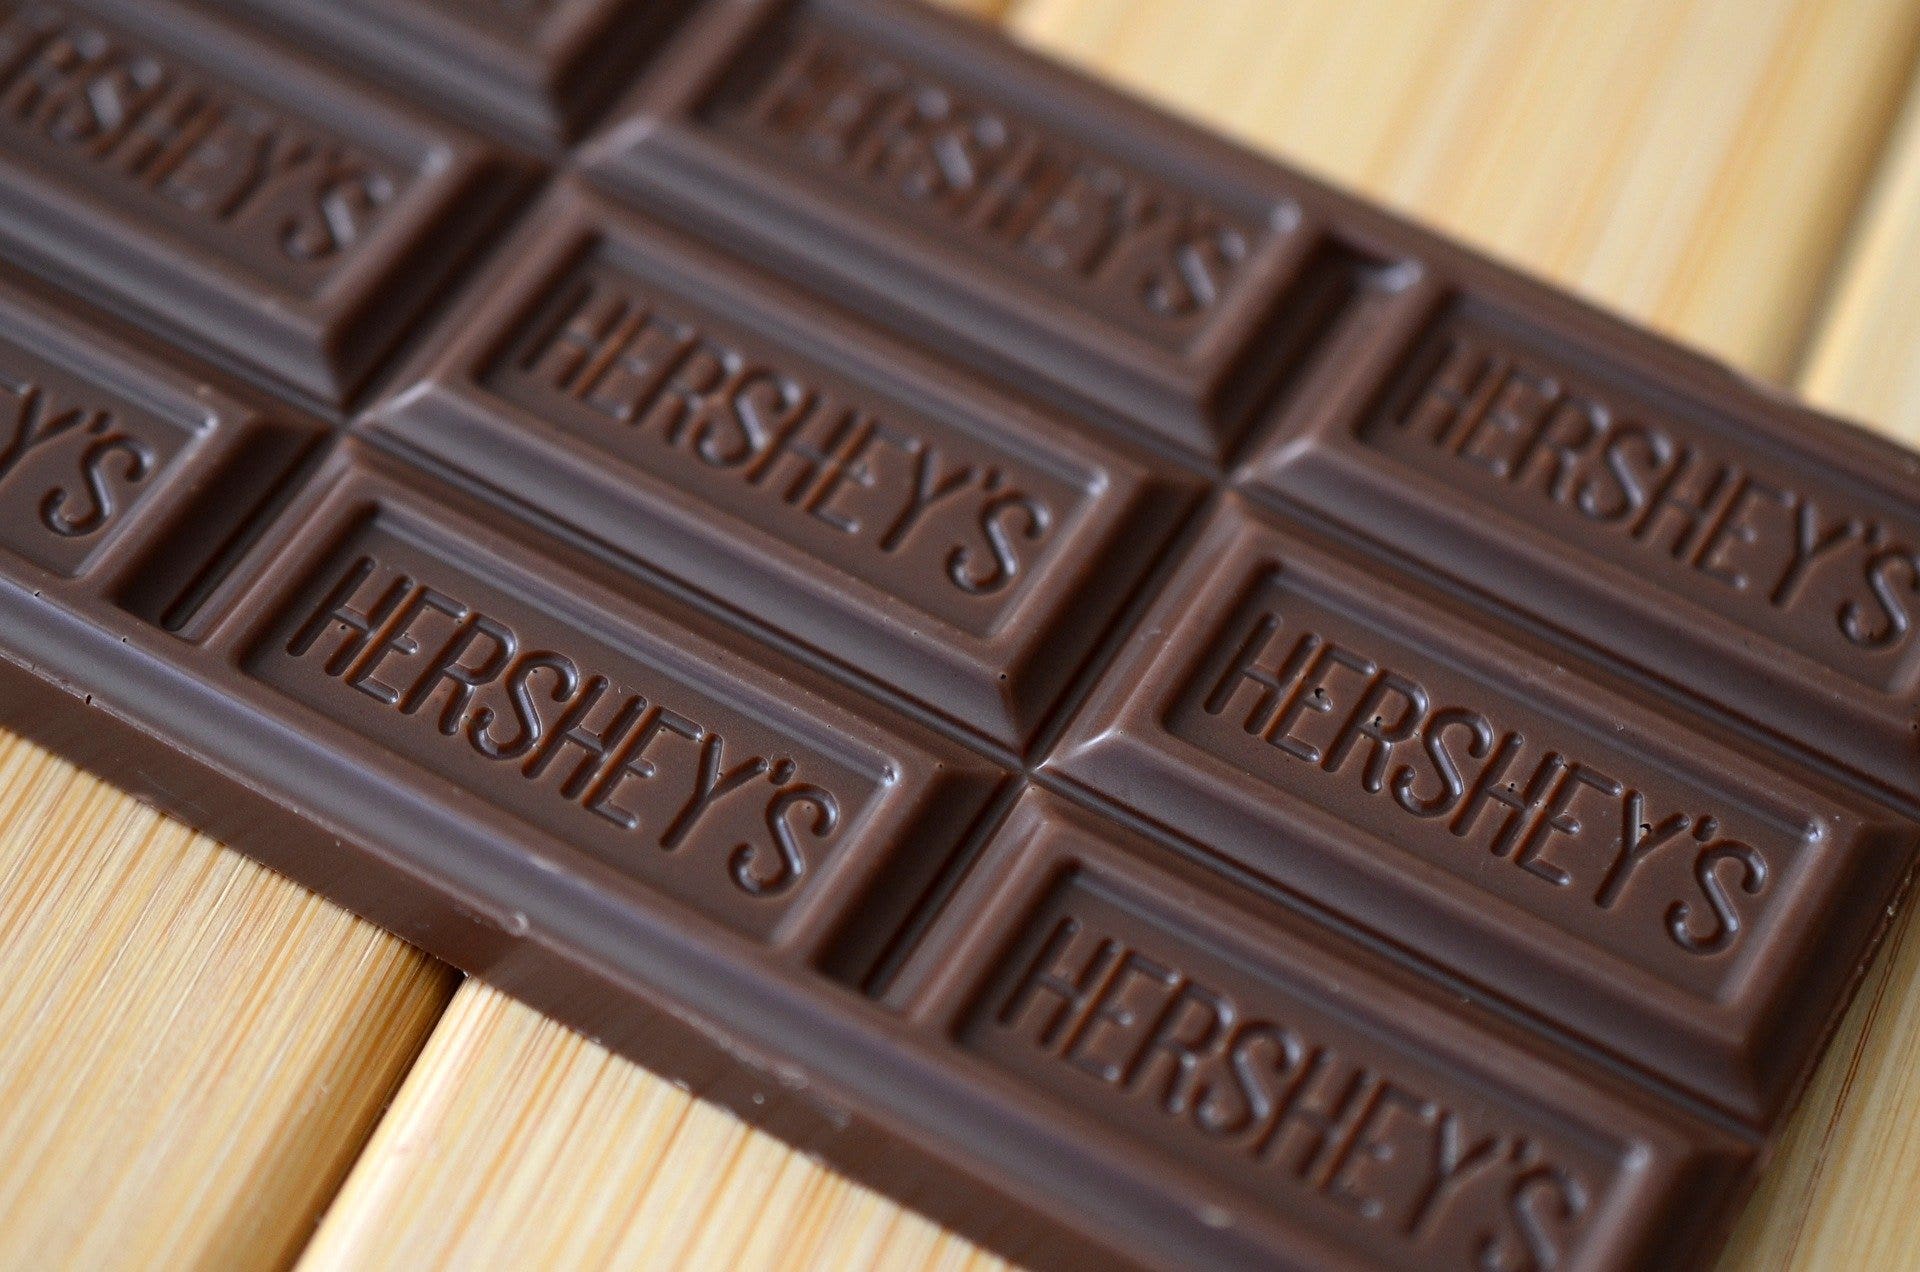 Customer Sues Hershey Alleging Certain Dark Chocolate Products Contain Heavy Metals